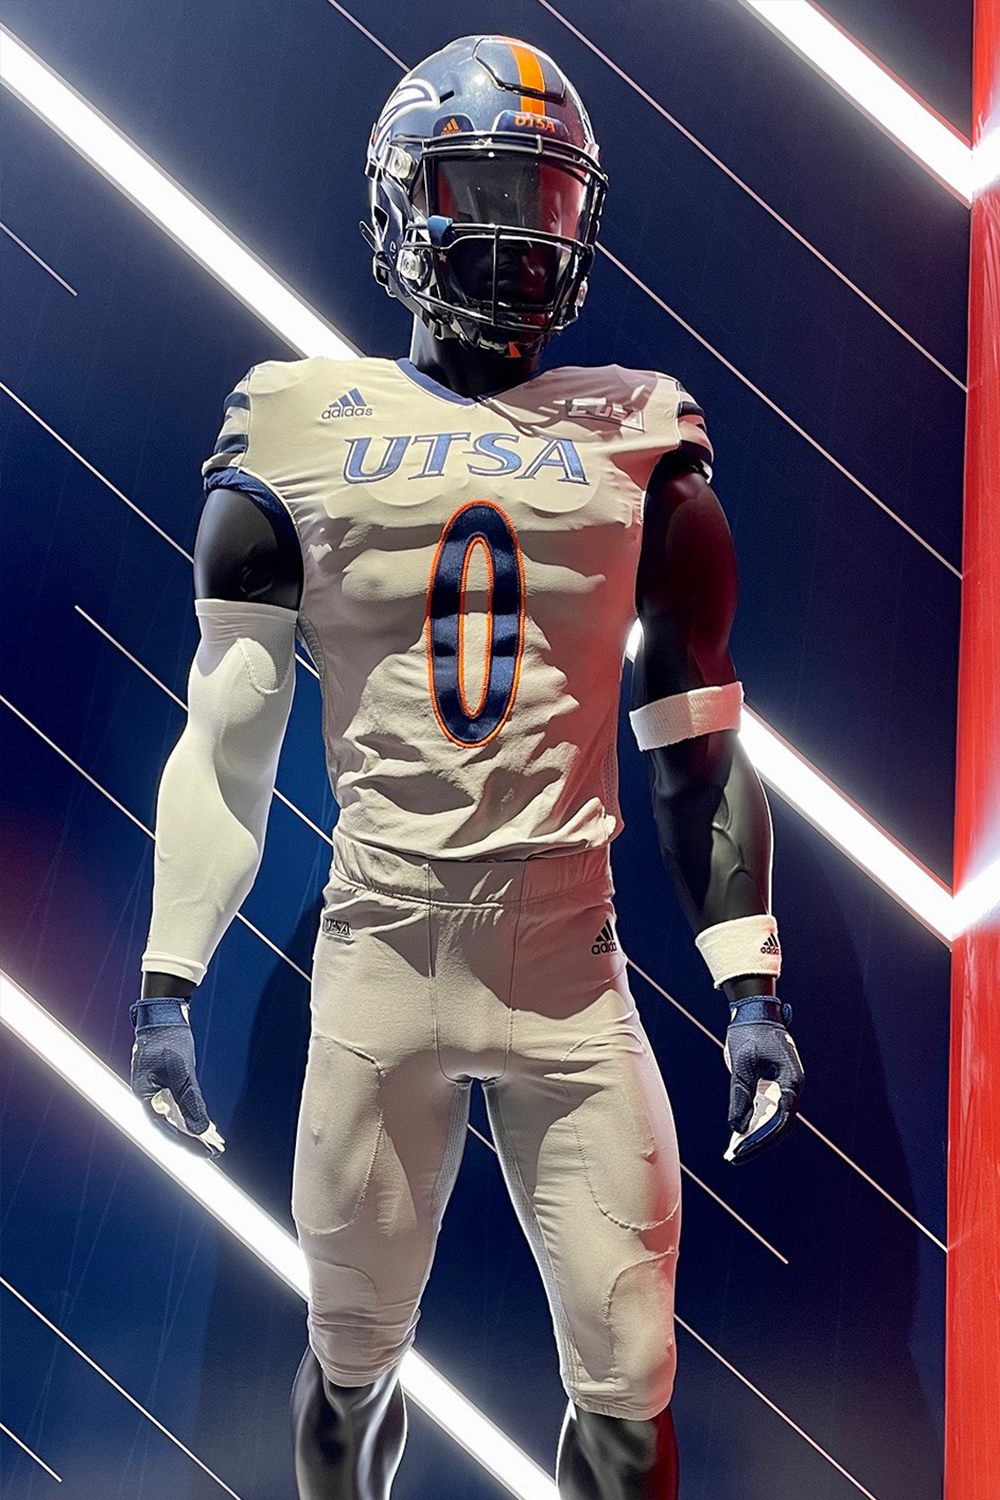 UTSA Athletics 2021 football uniforms